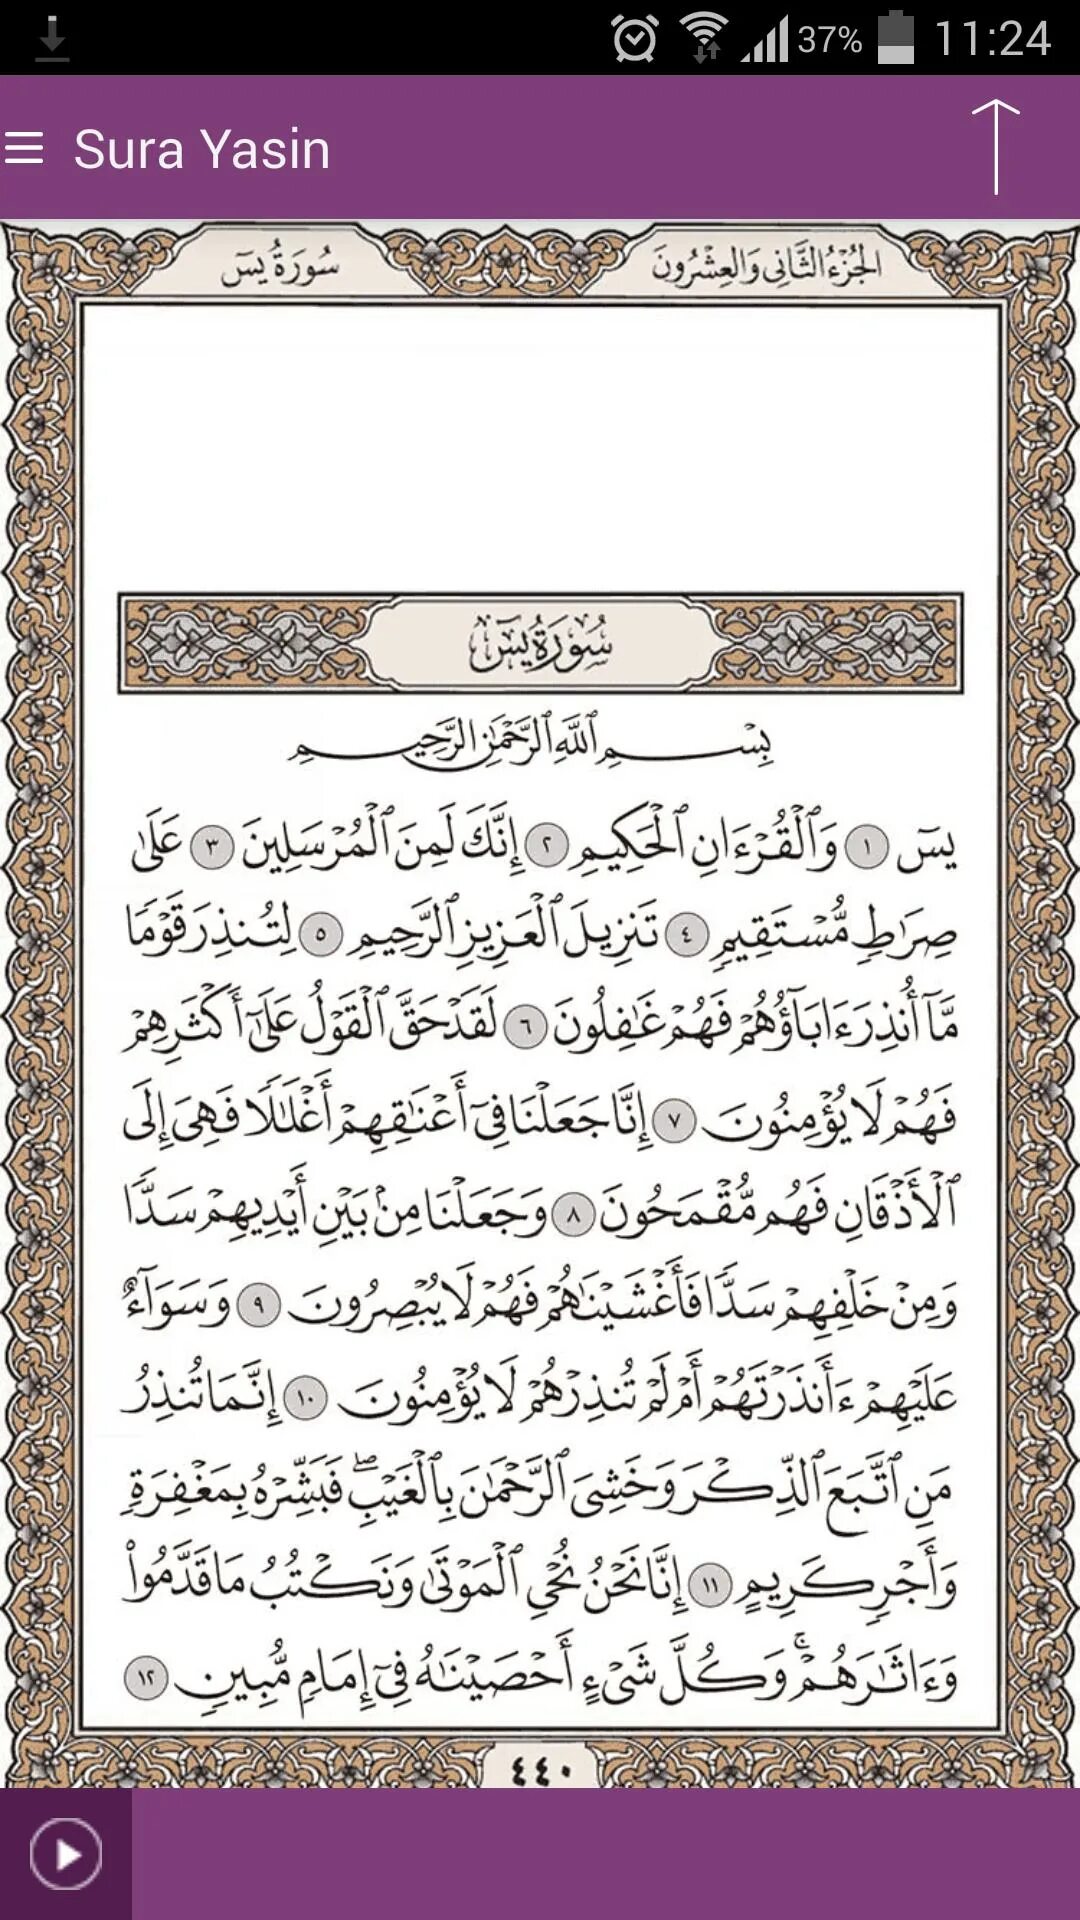 Сура ясин текст на арабском полностью. Коран Сура ясин. Сура ясин 1 Мубин. Ясин Коран 2 страниц. Сура ясин 1 и 2 Мубин.